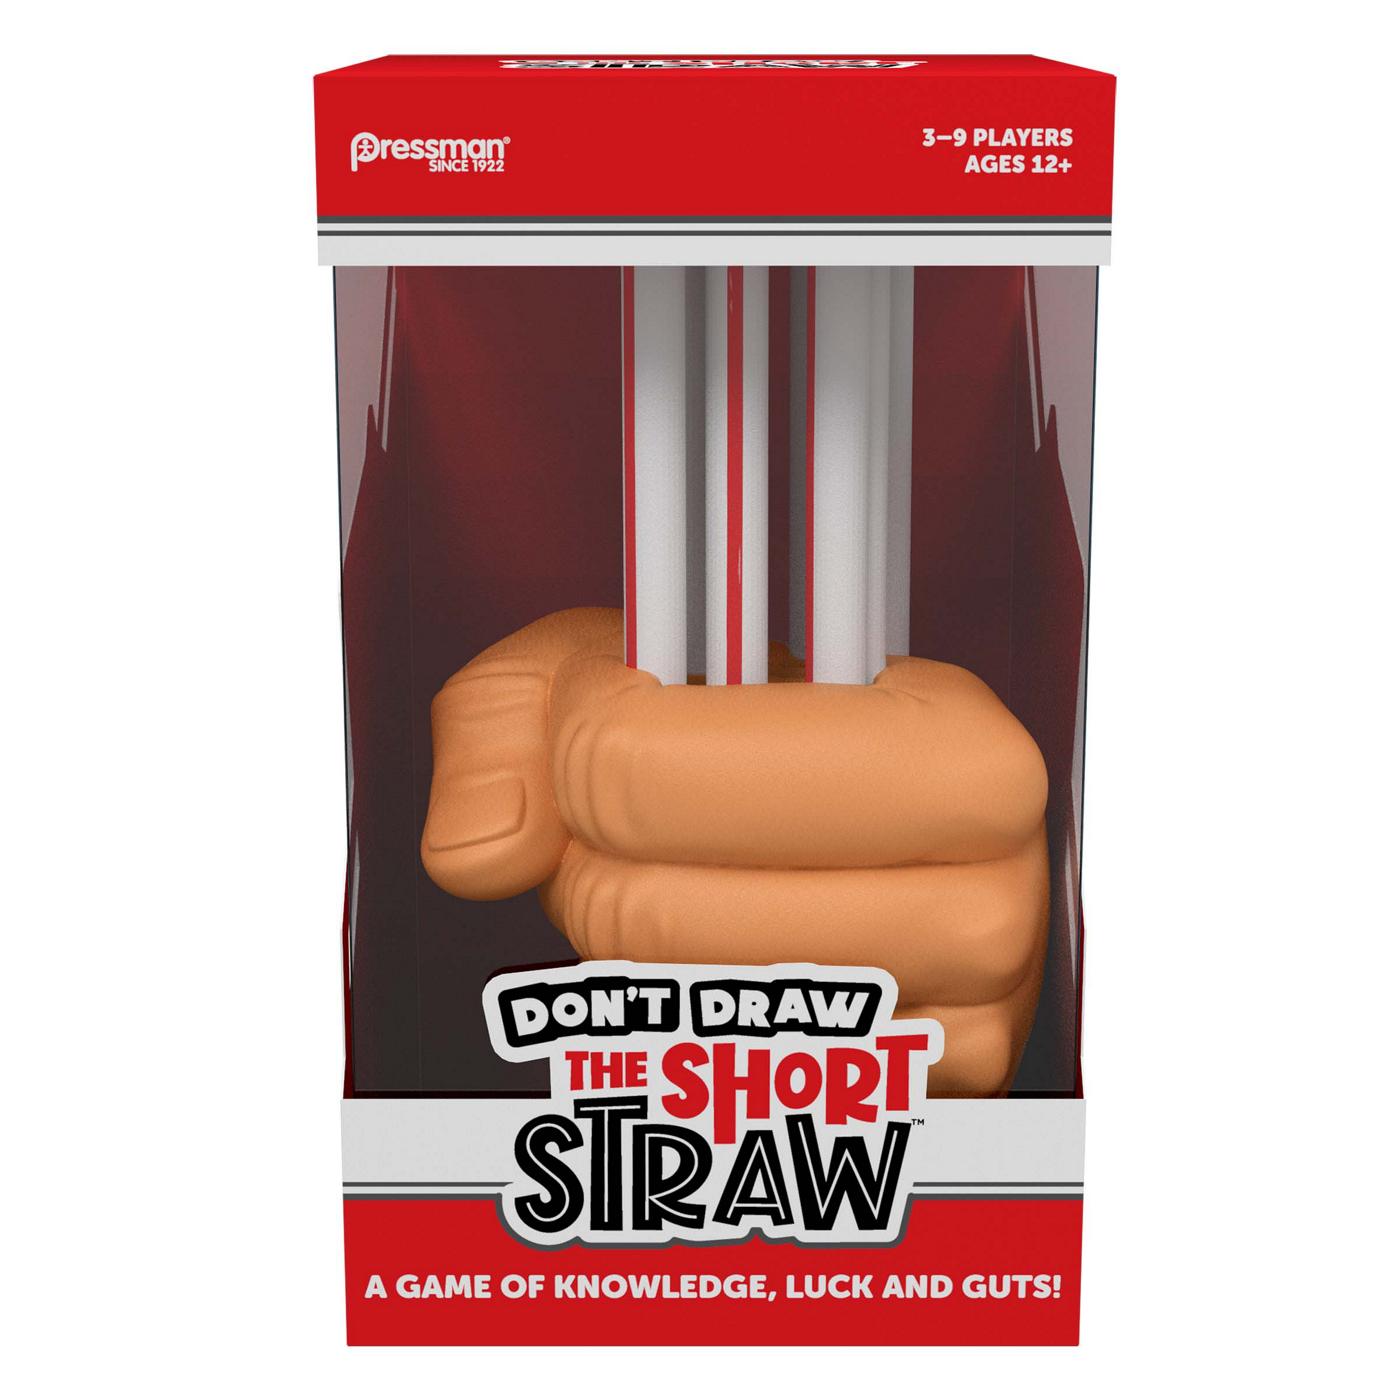  Short Straws